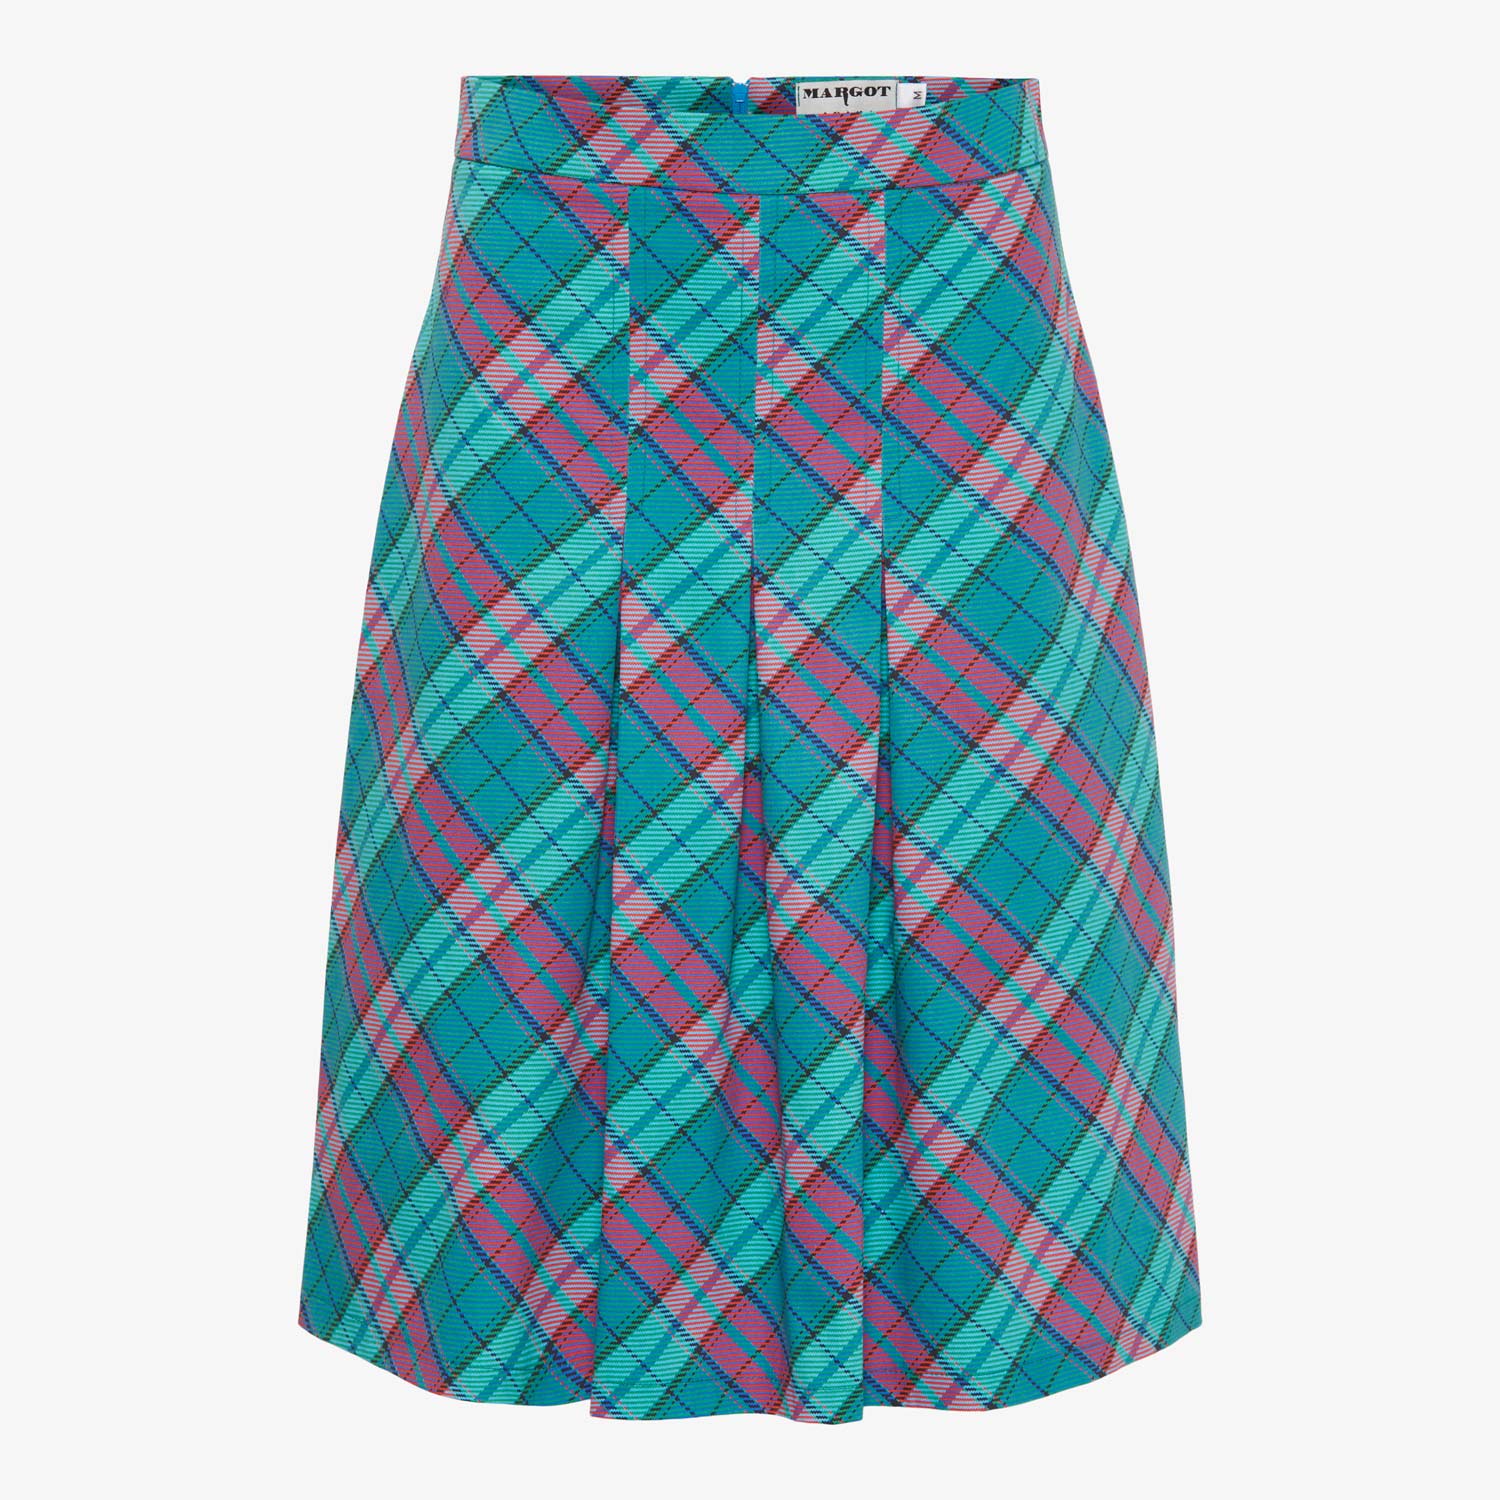 Huberta Hips Skirt